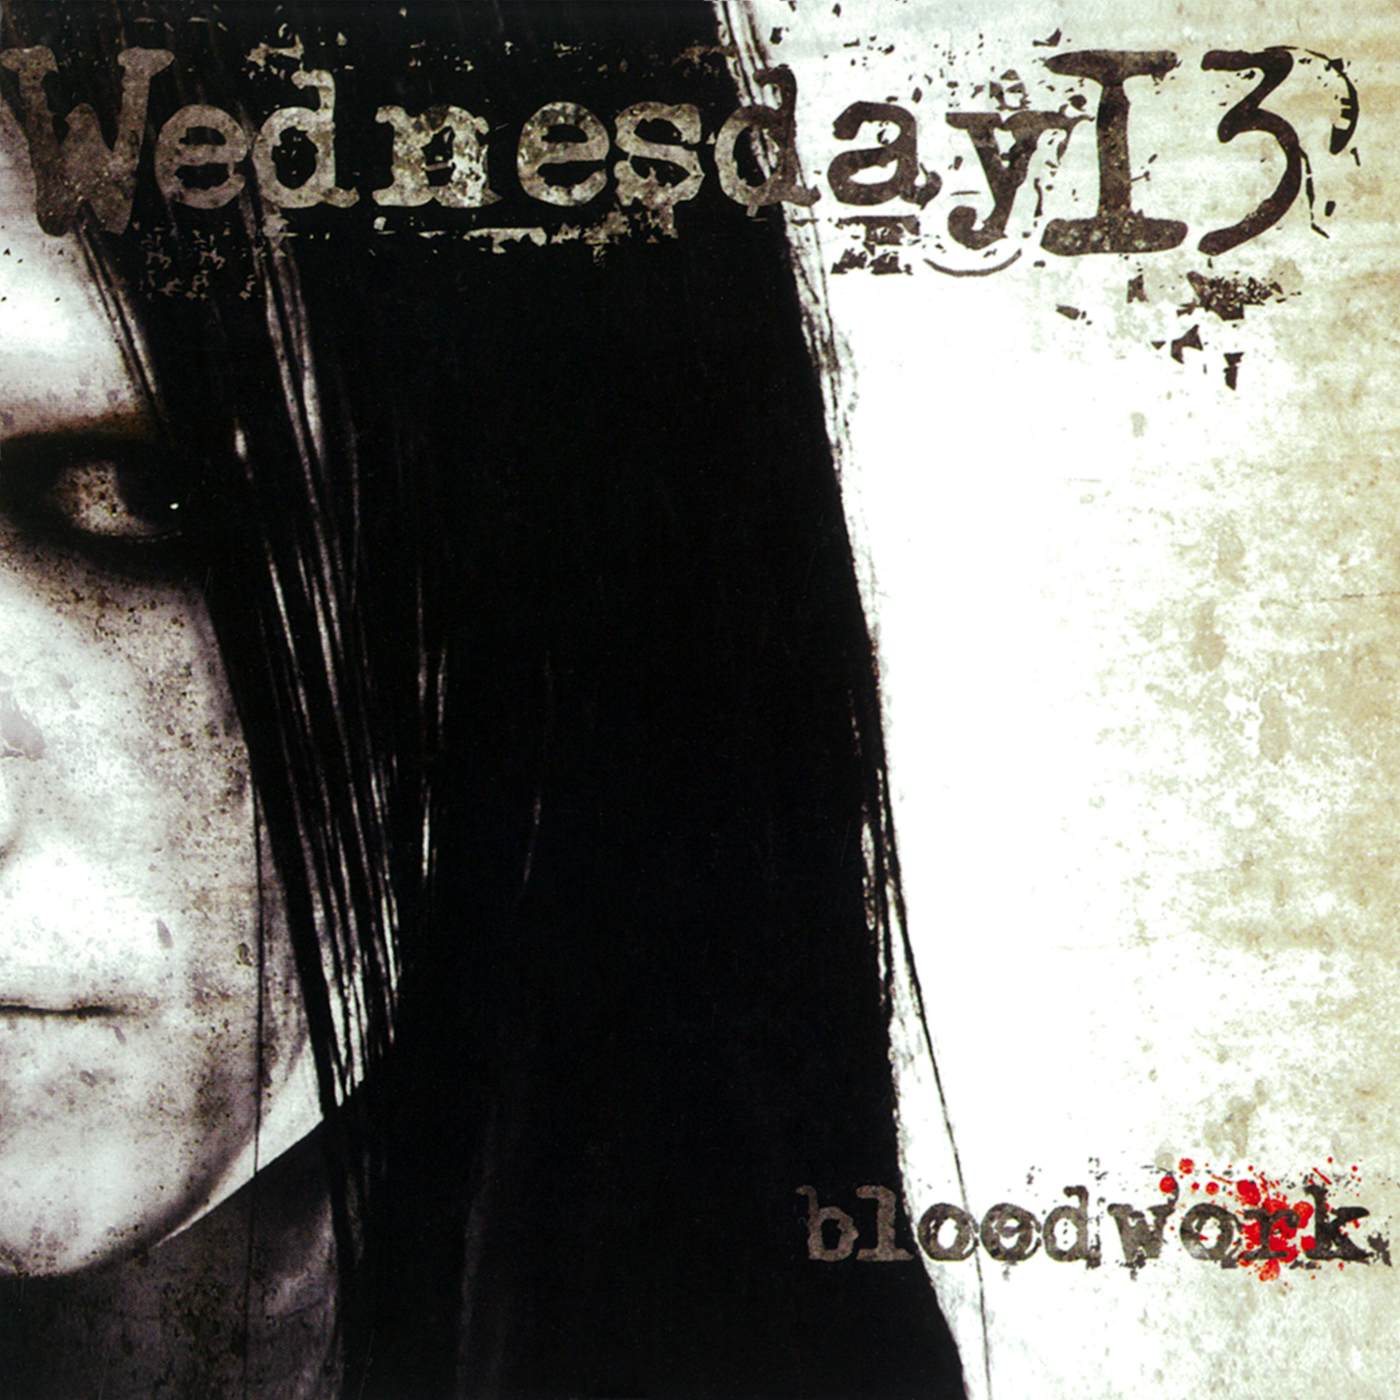 Wednesday 13 Bloodwork Vinyl Record